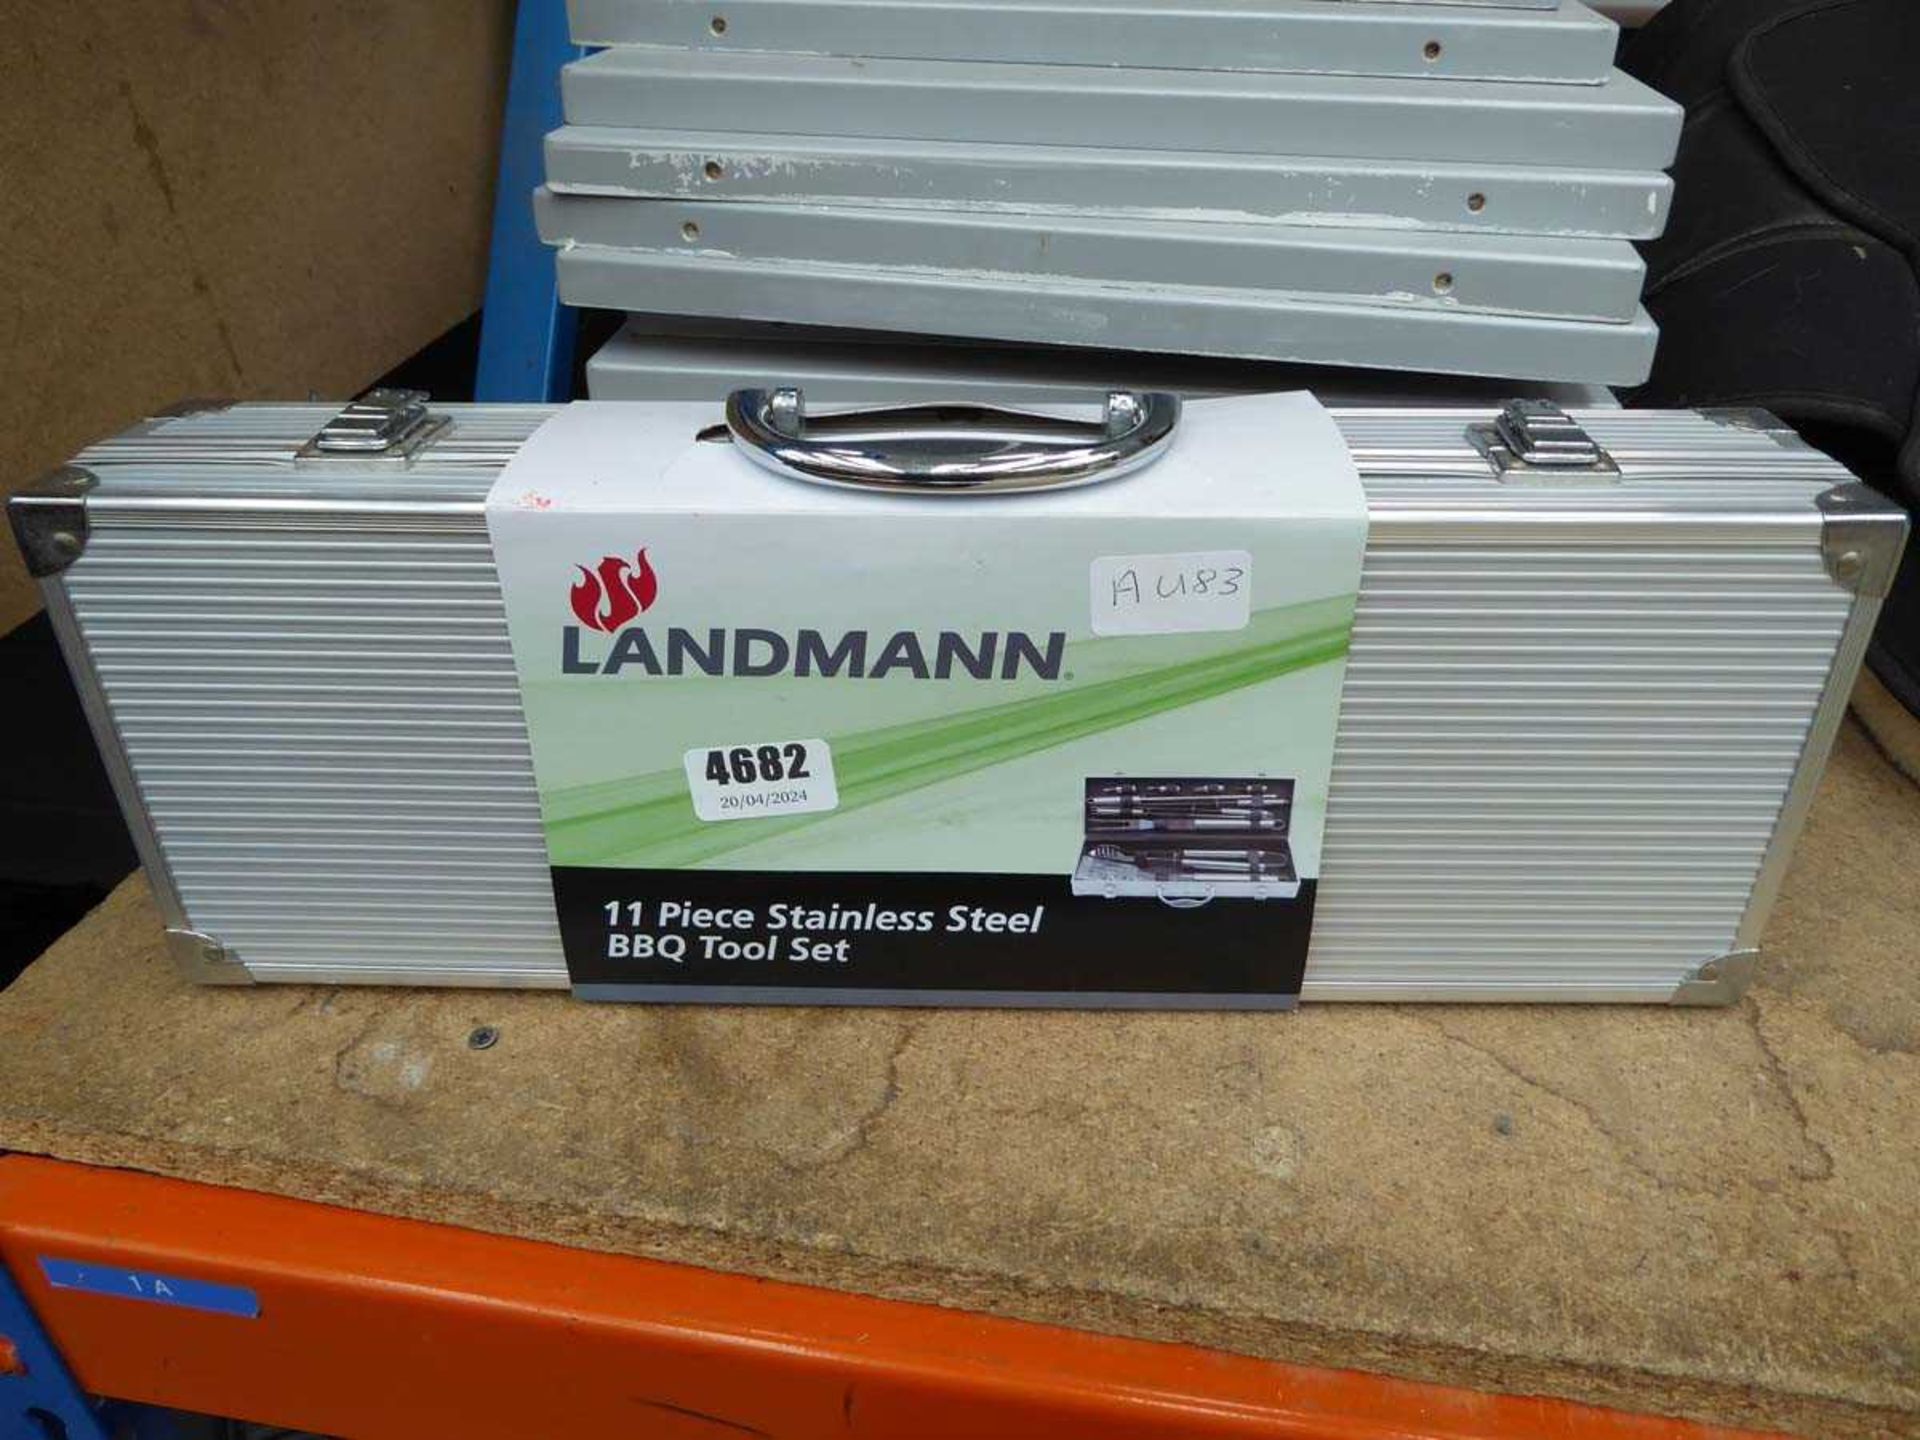 Landman stainless steel BBQ set